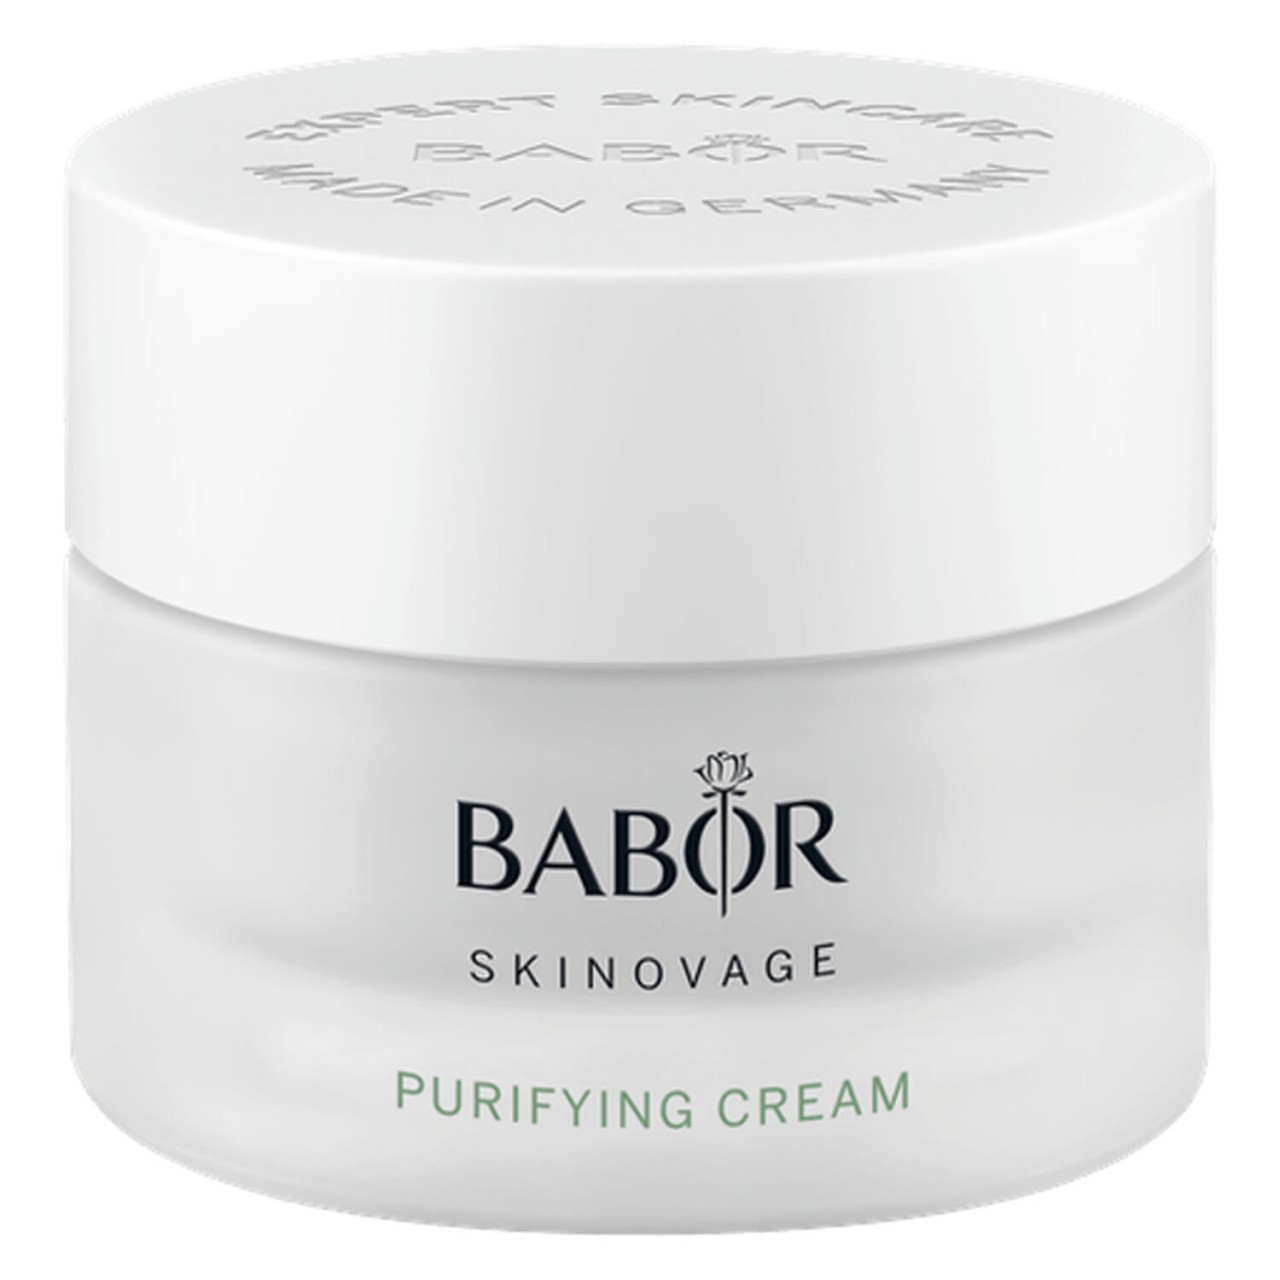 BABOR SKINOVAGE - Purifying Cream von BABOR